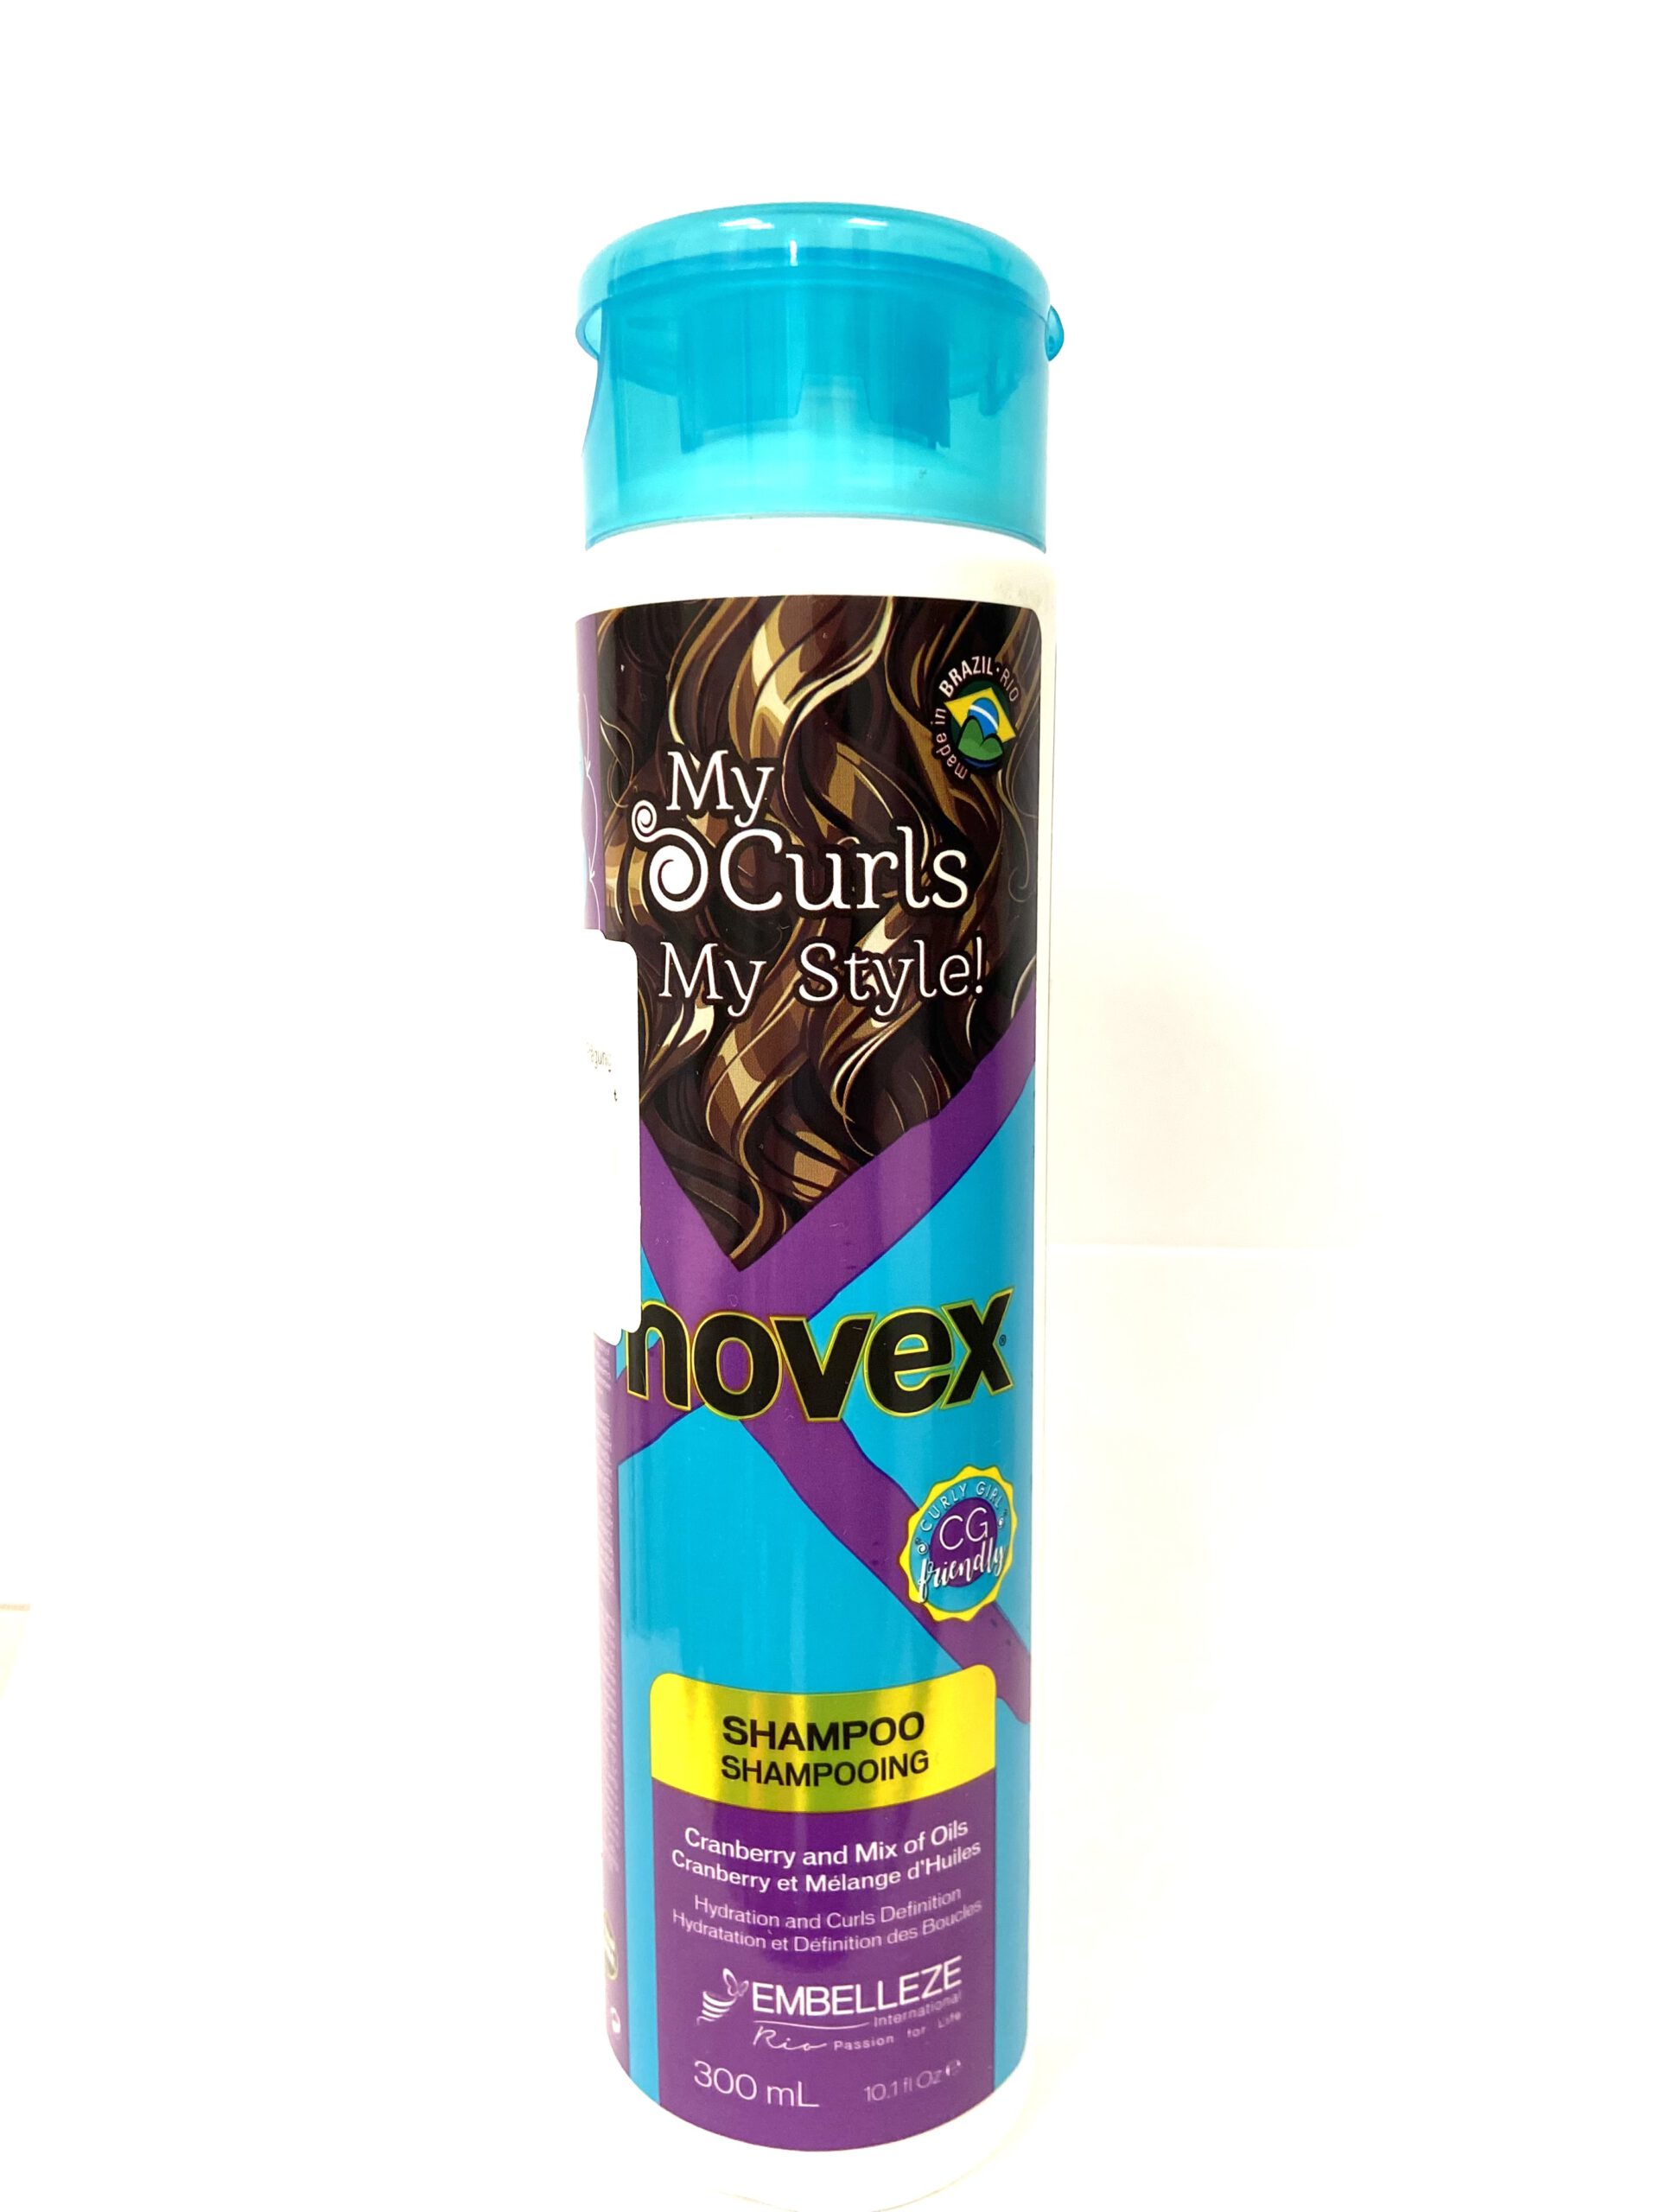 My Curls My Style Novex Shampoo 300mL